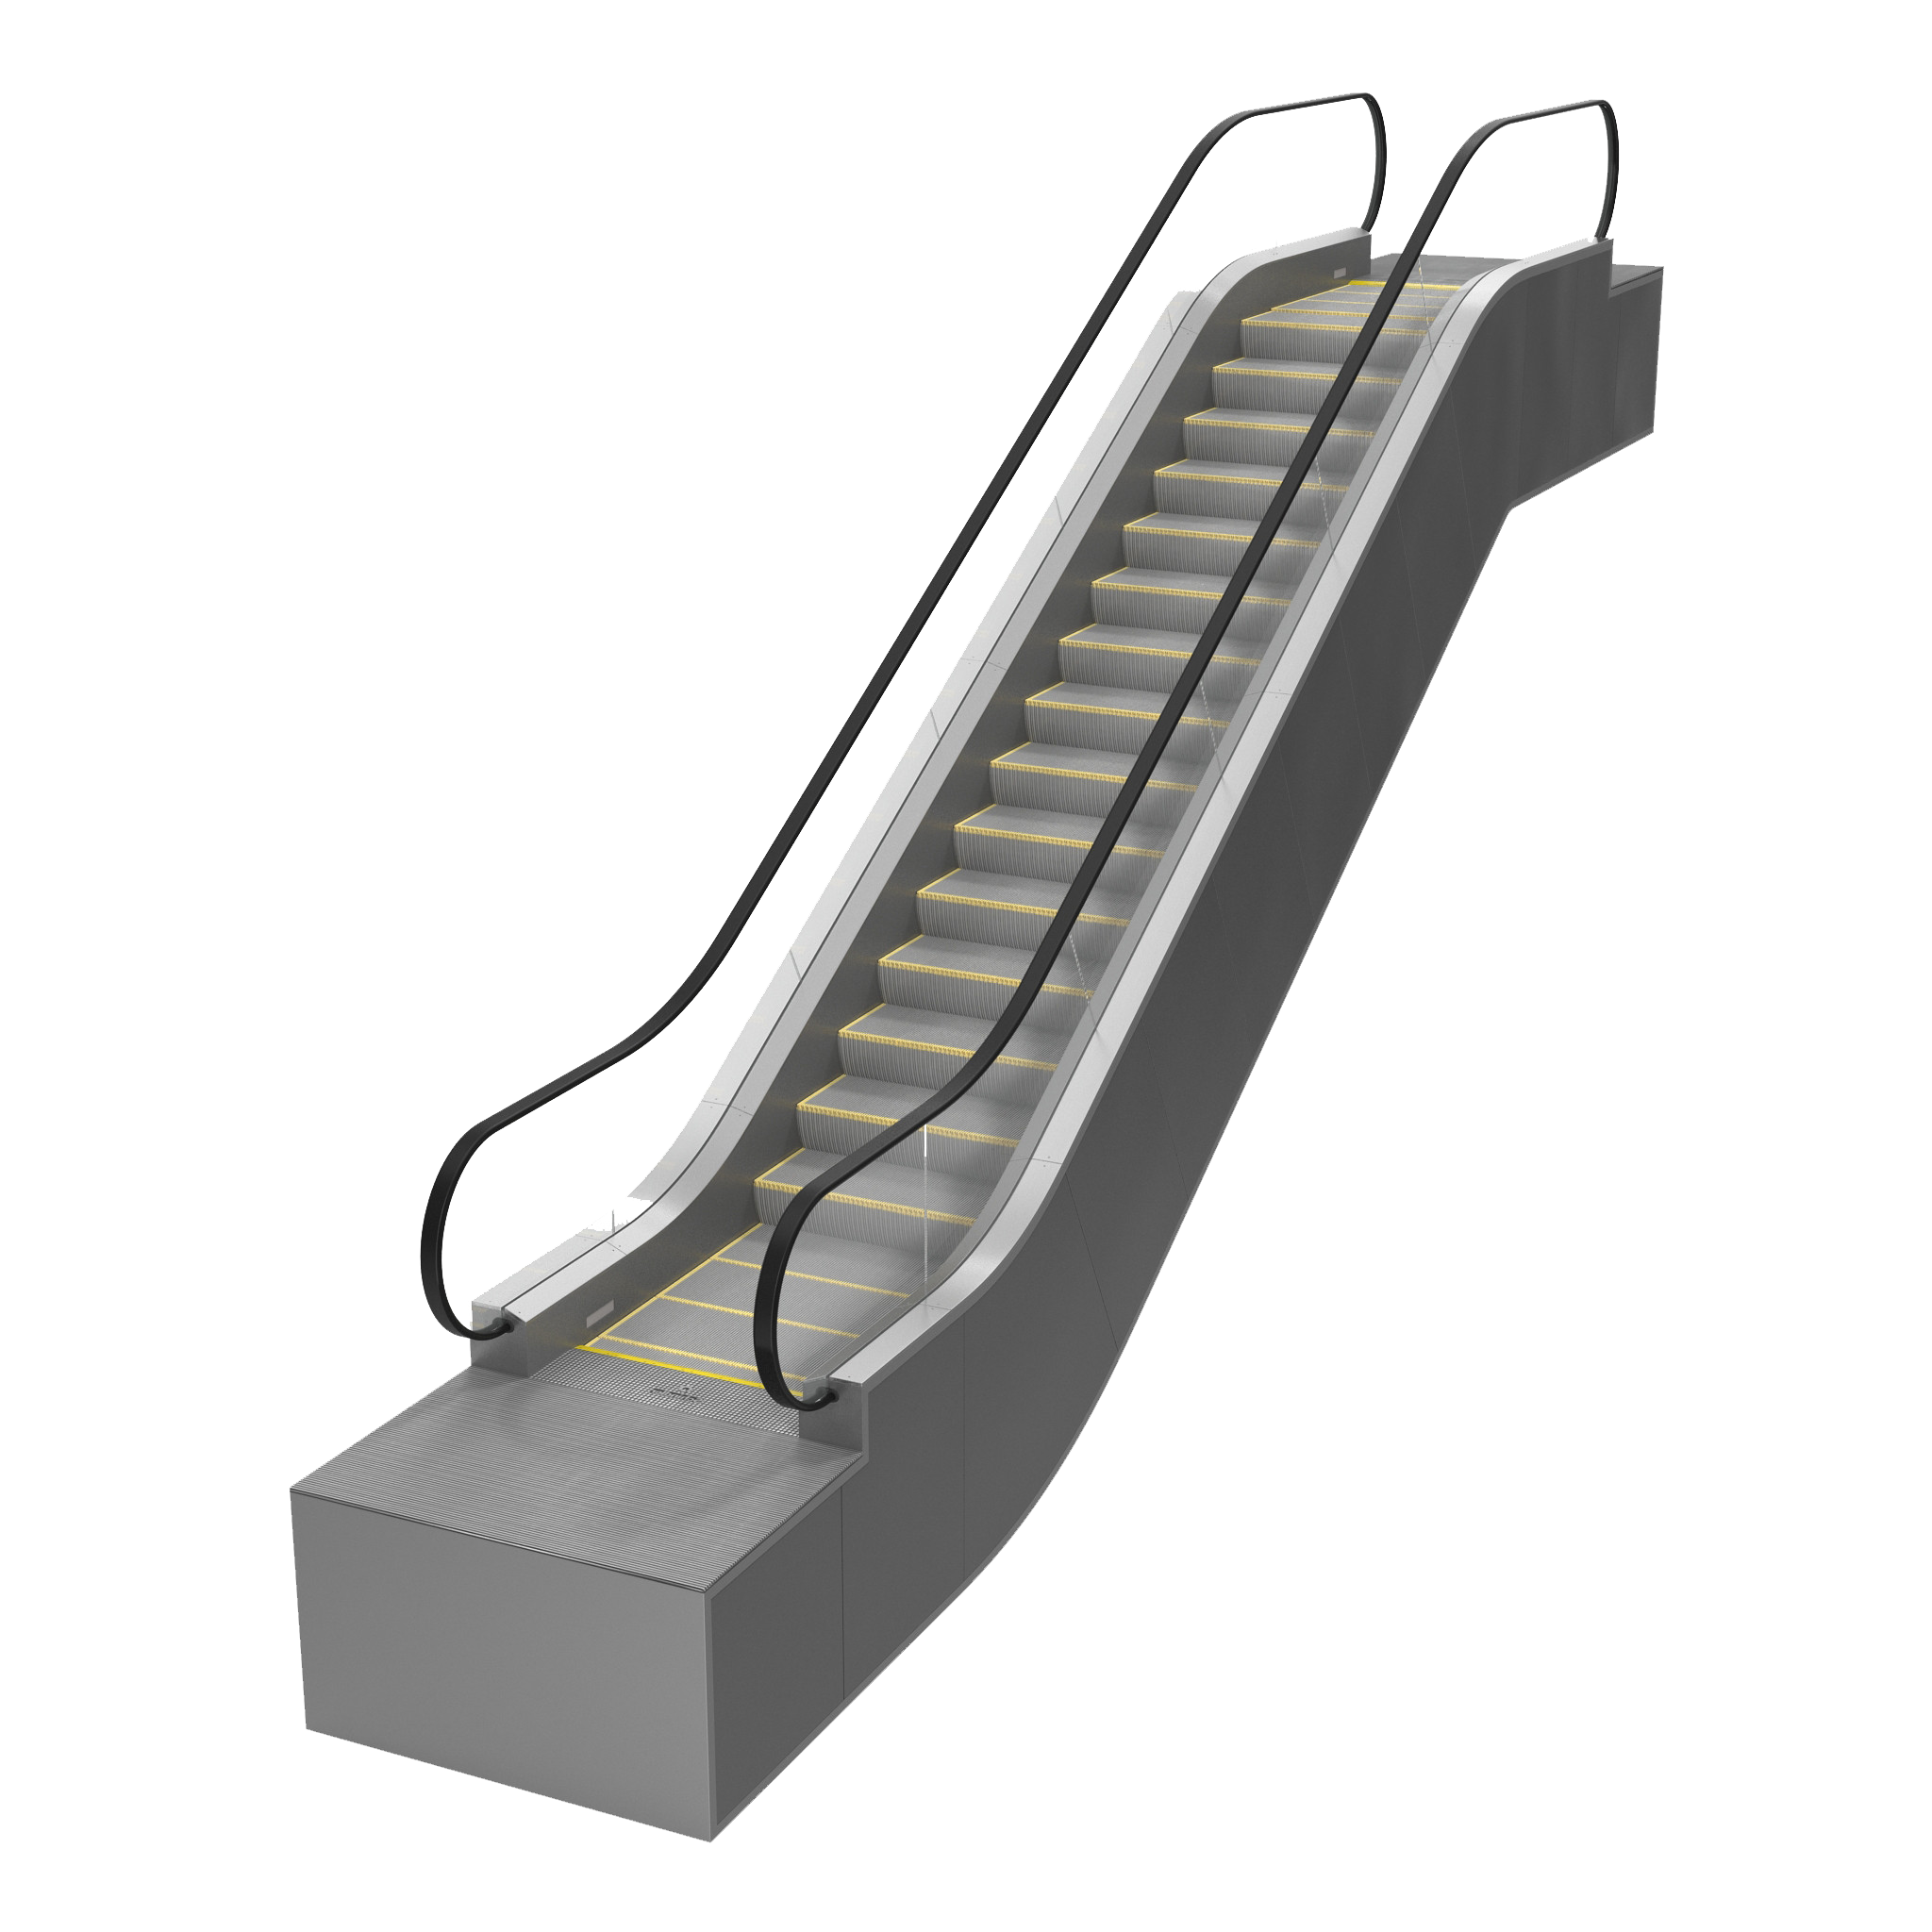 clipart of escalator - photo #48